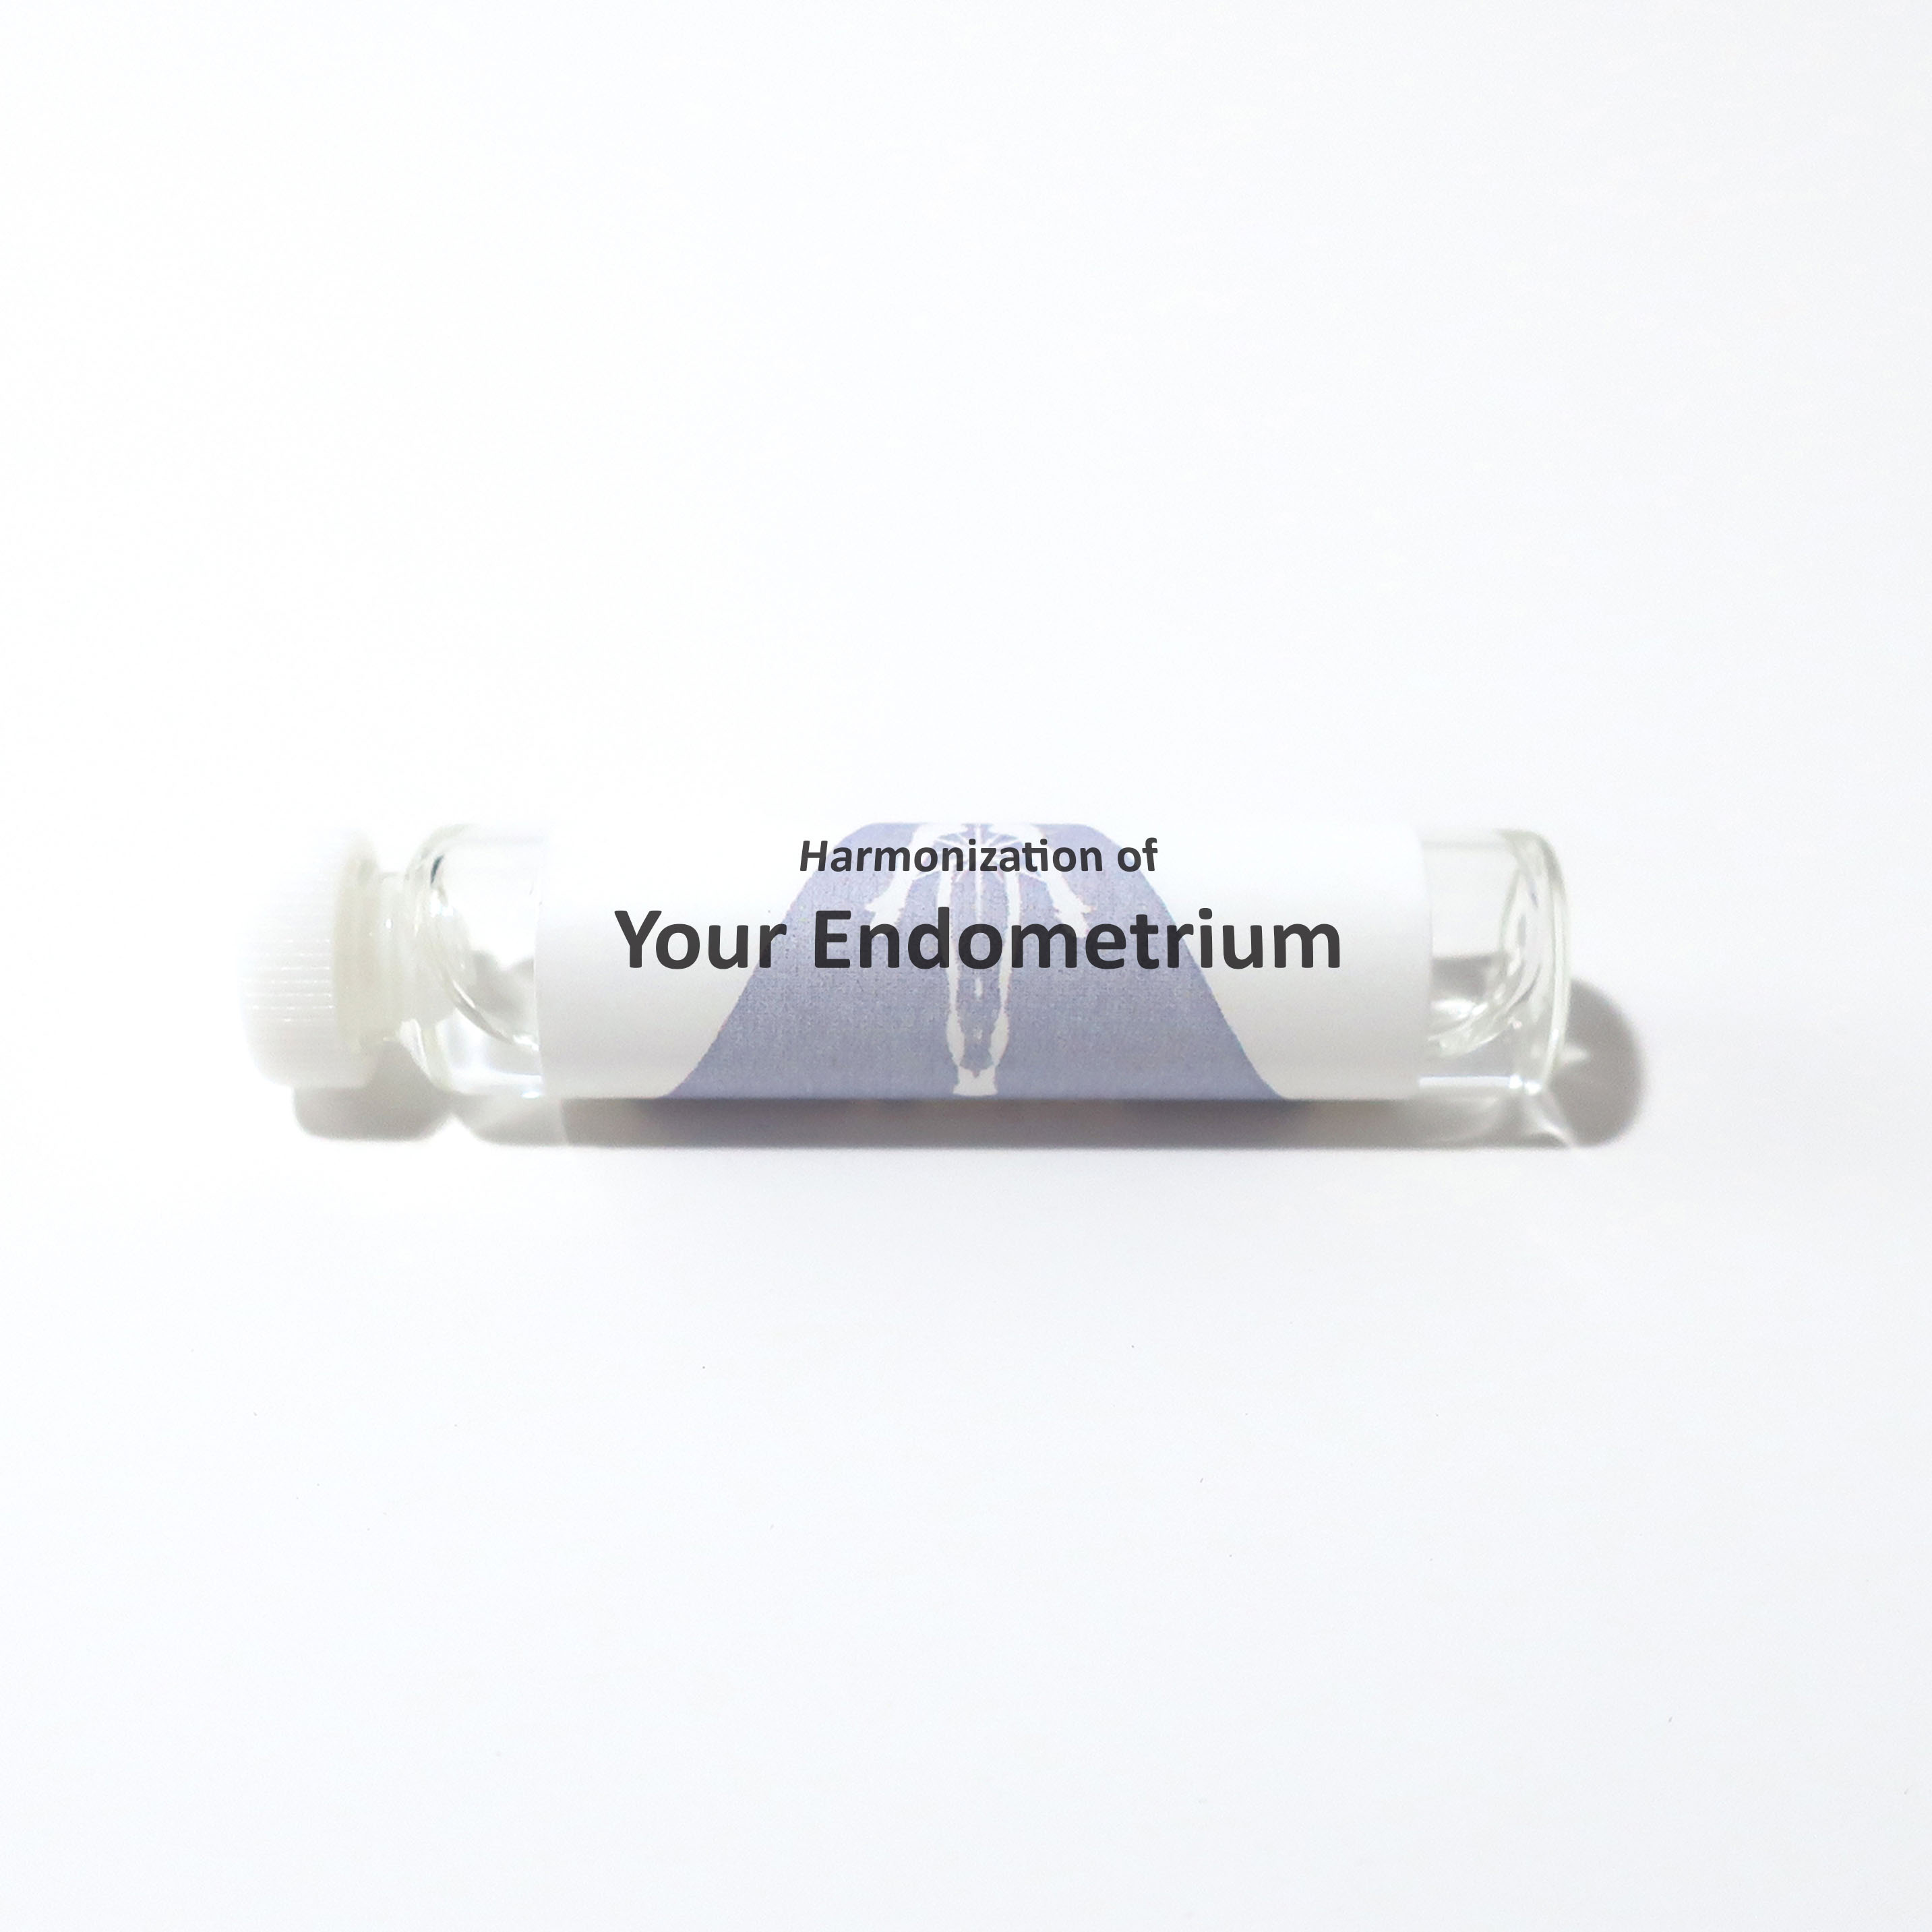 Your Endometrium